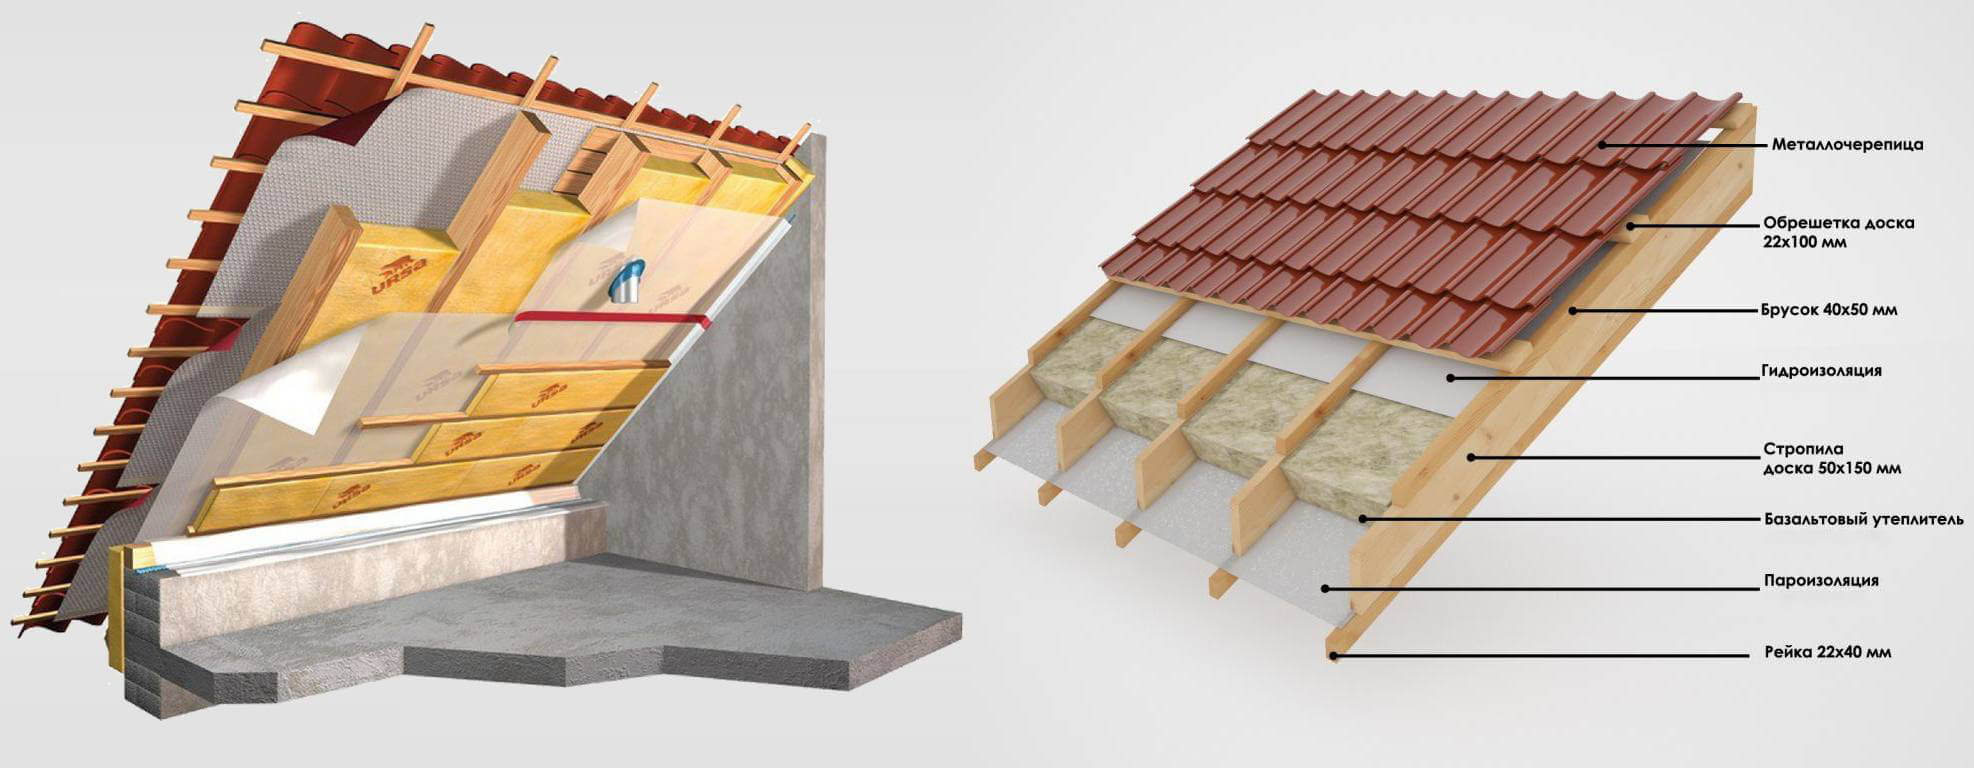 схема гидро и пароизоляции крыши дома